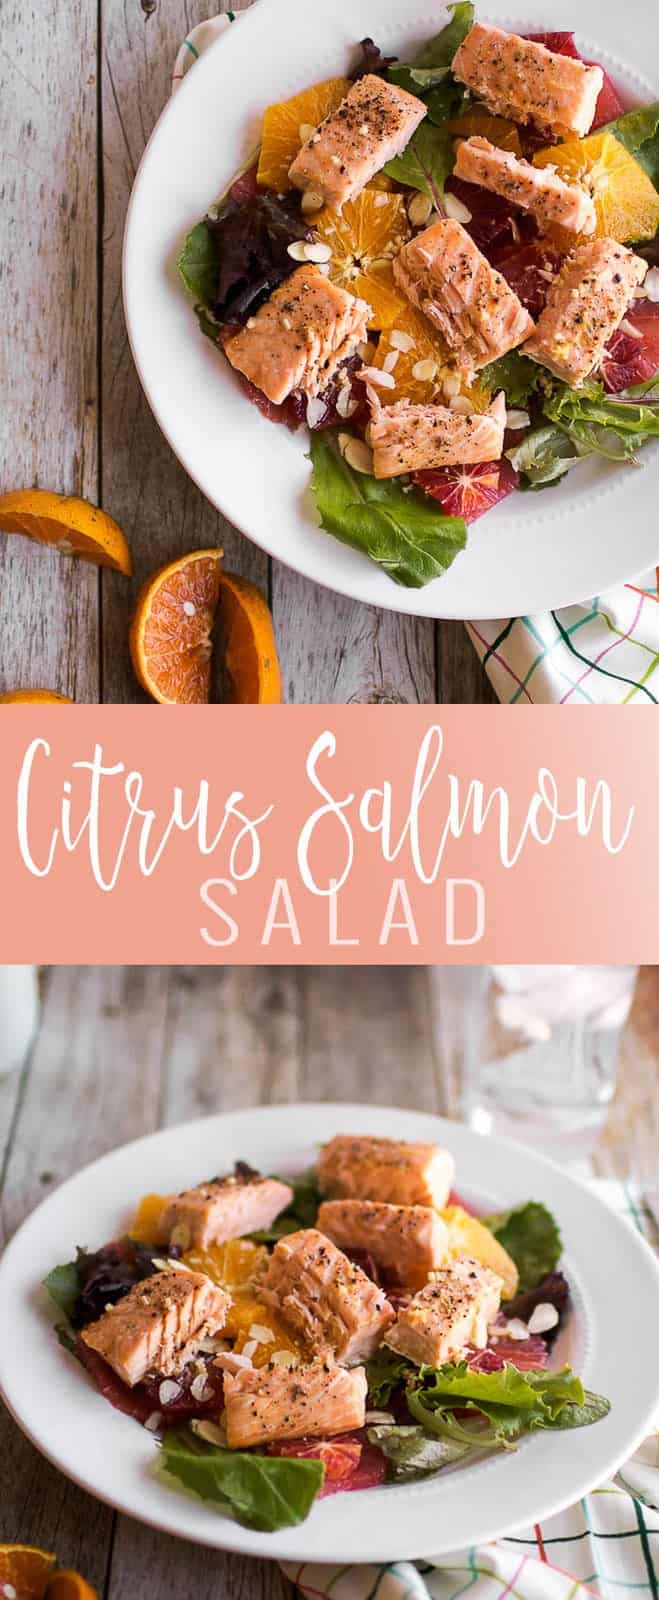 Citrus and Salmon Salad pin